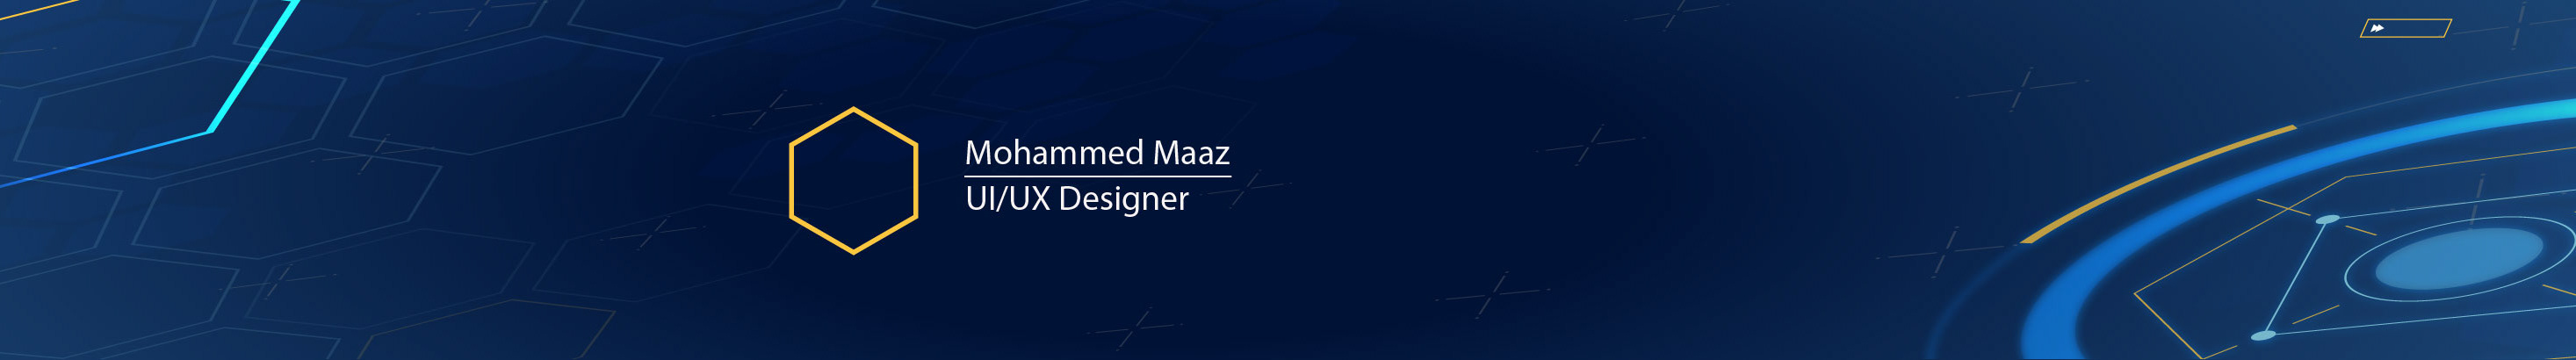 Mohammed Maazs profilbanner